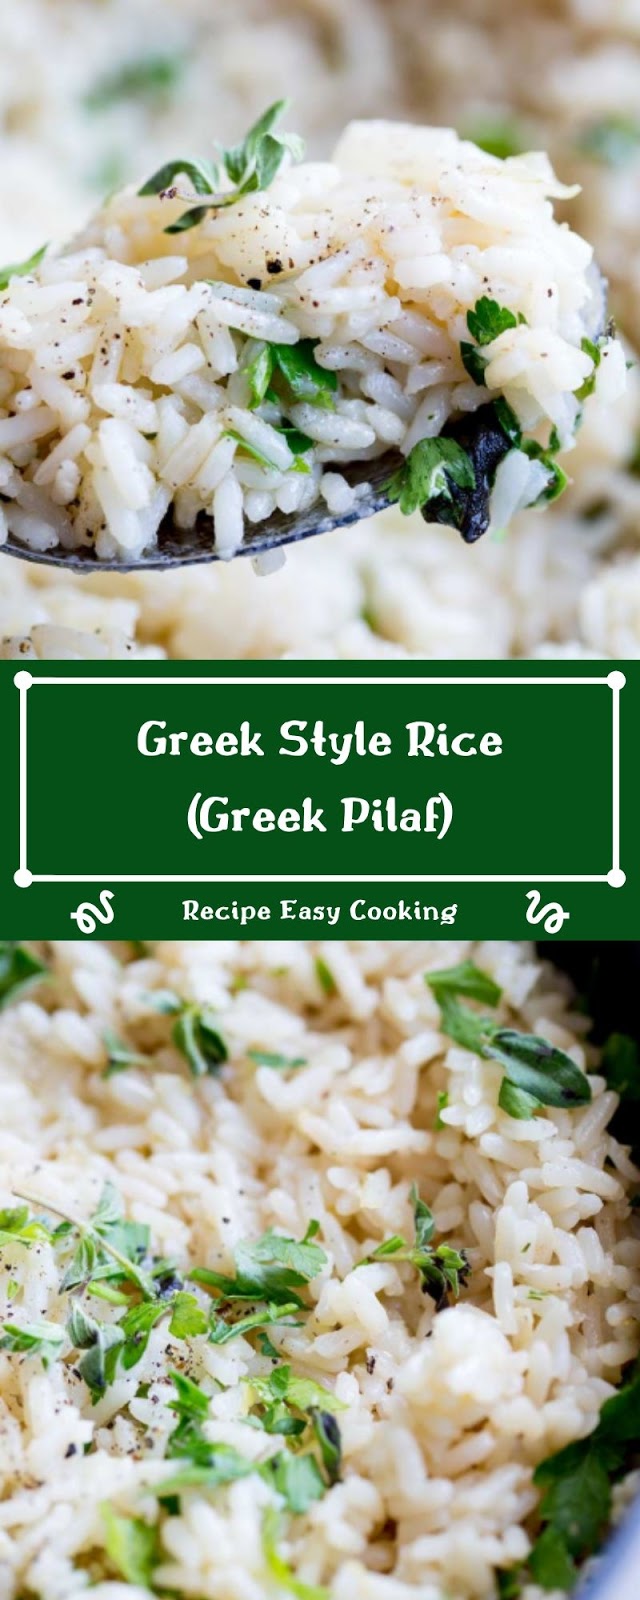 Greek Style Rice (Greek Pilaf)